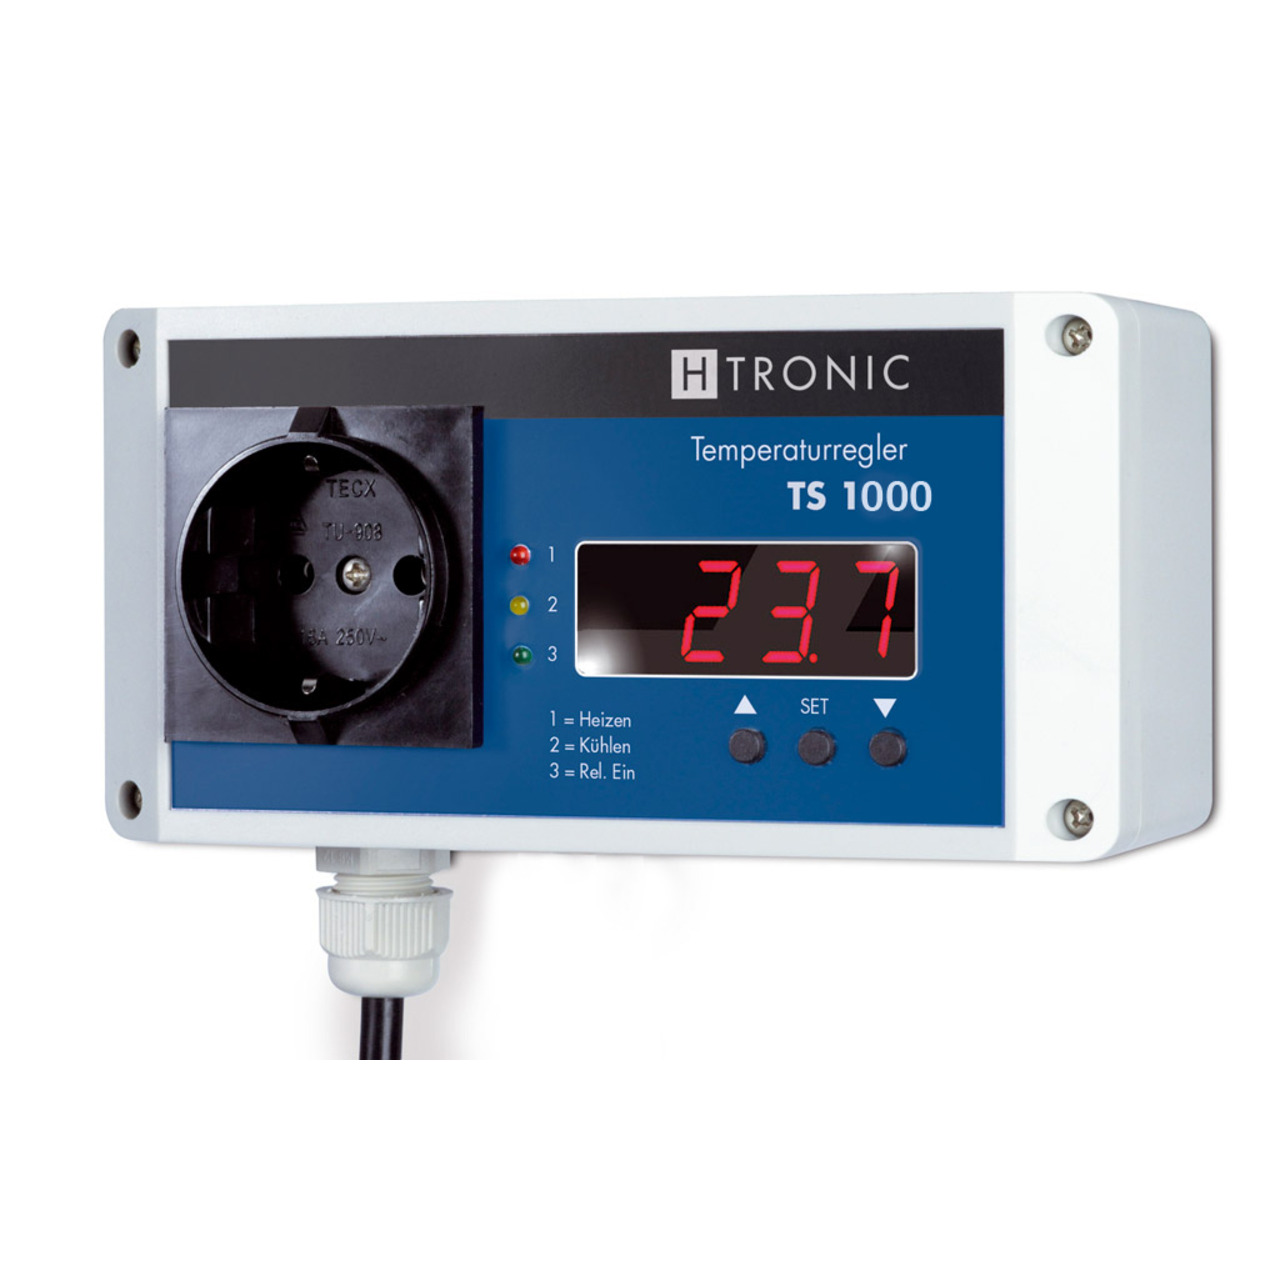 H-Tronic TS 1000 Temperaturschalter unter Haustechnik